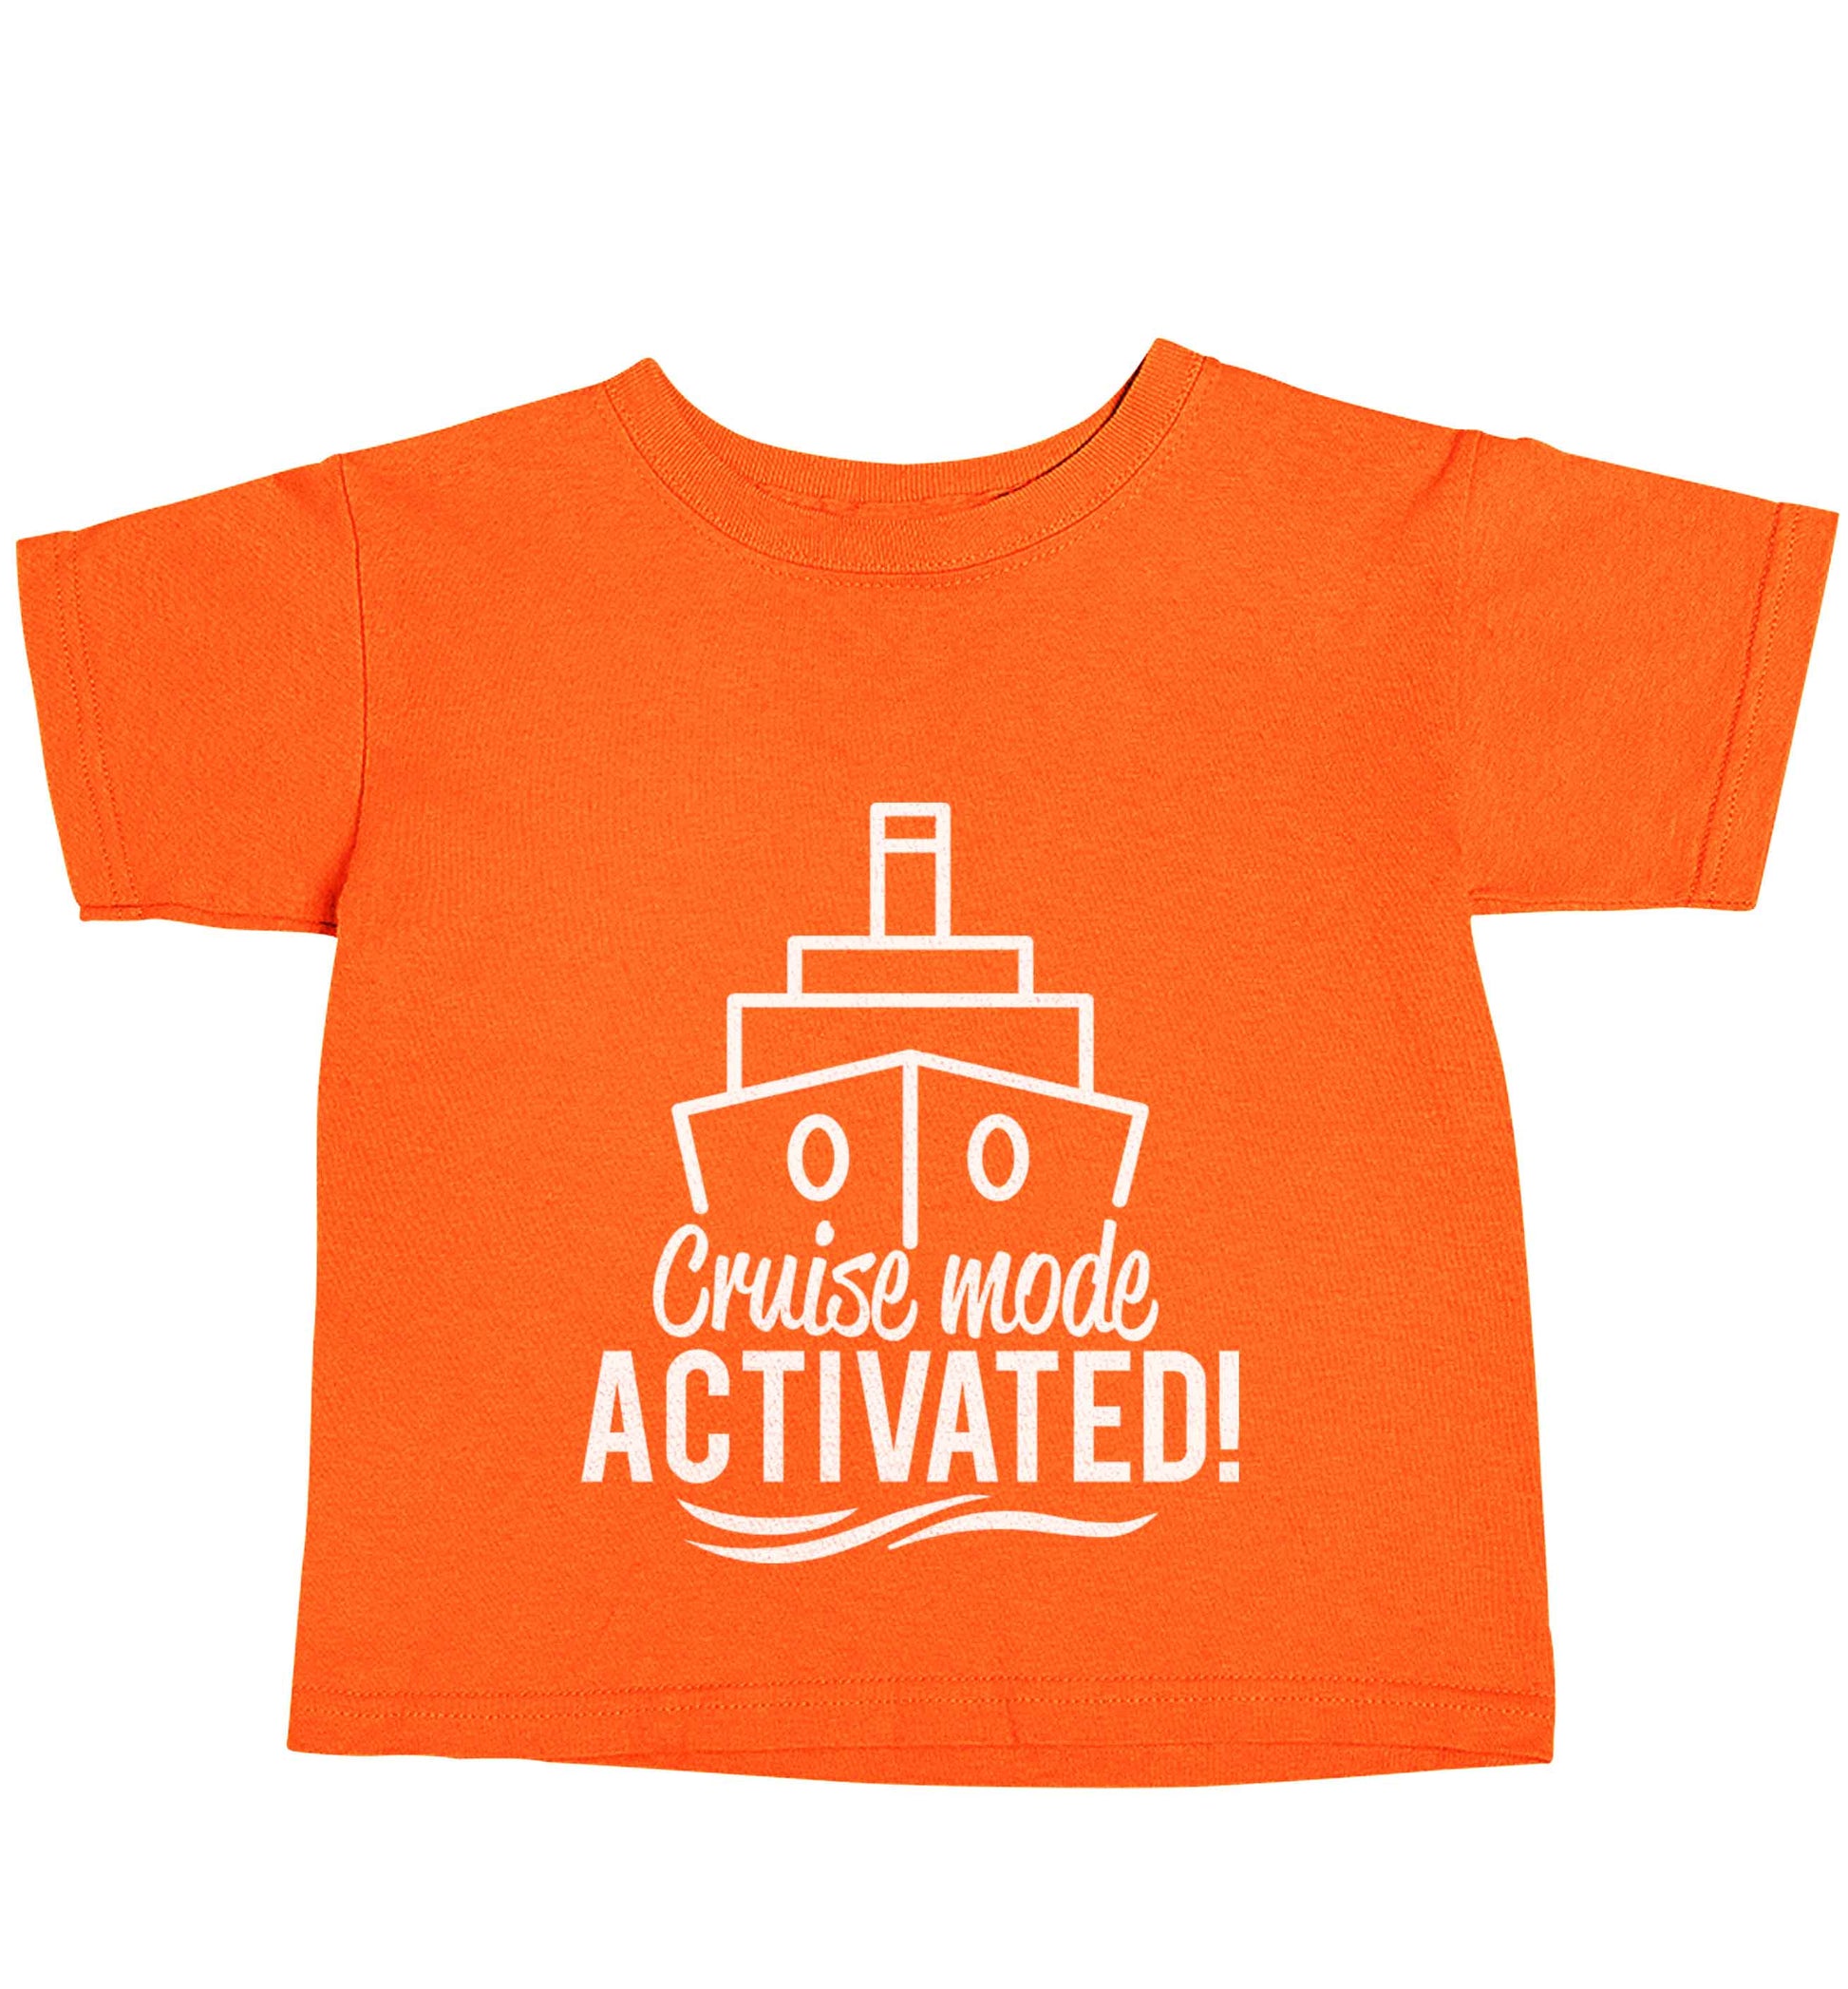 Cruise mode activated orange baby toddler Tshirt 2 Years